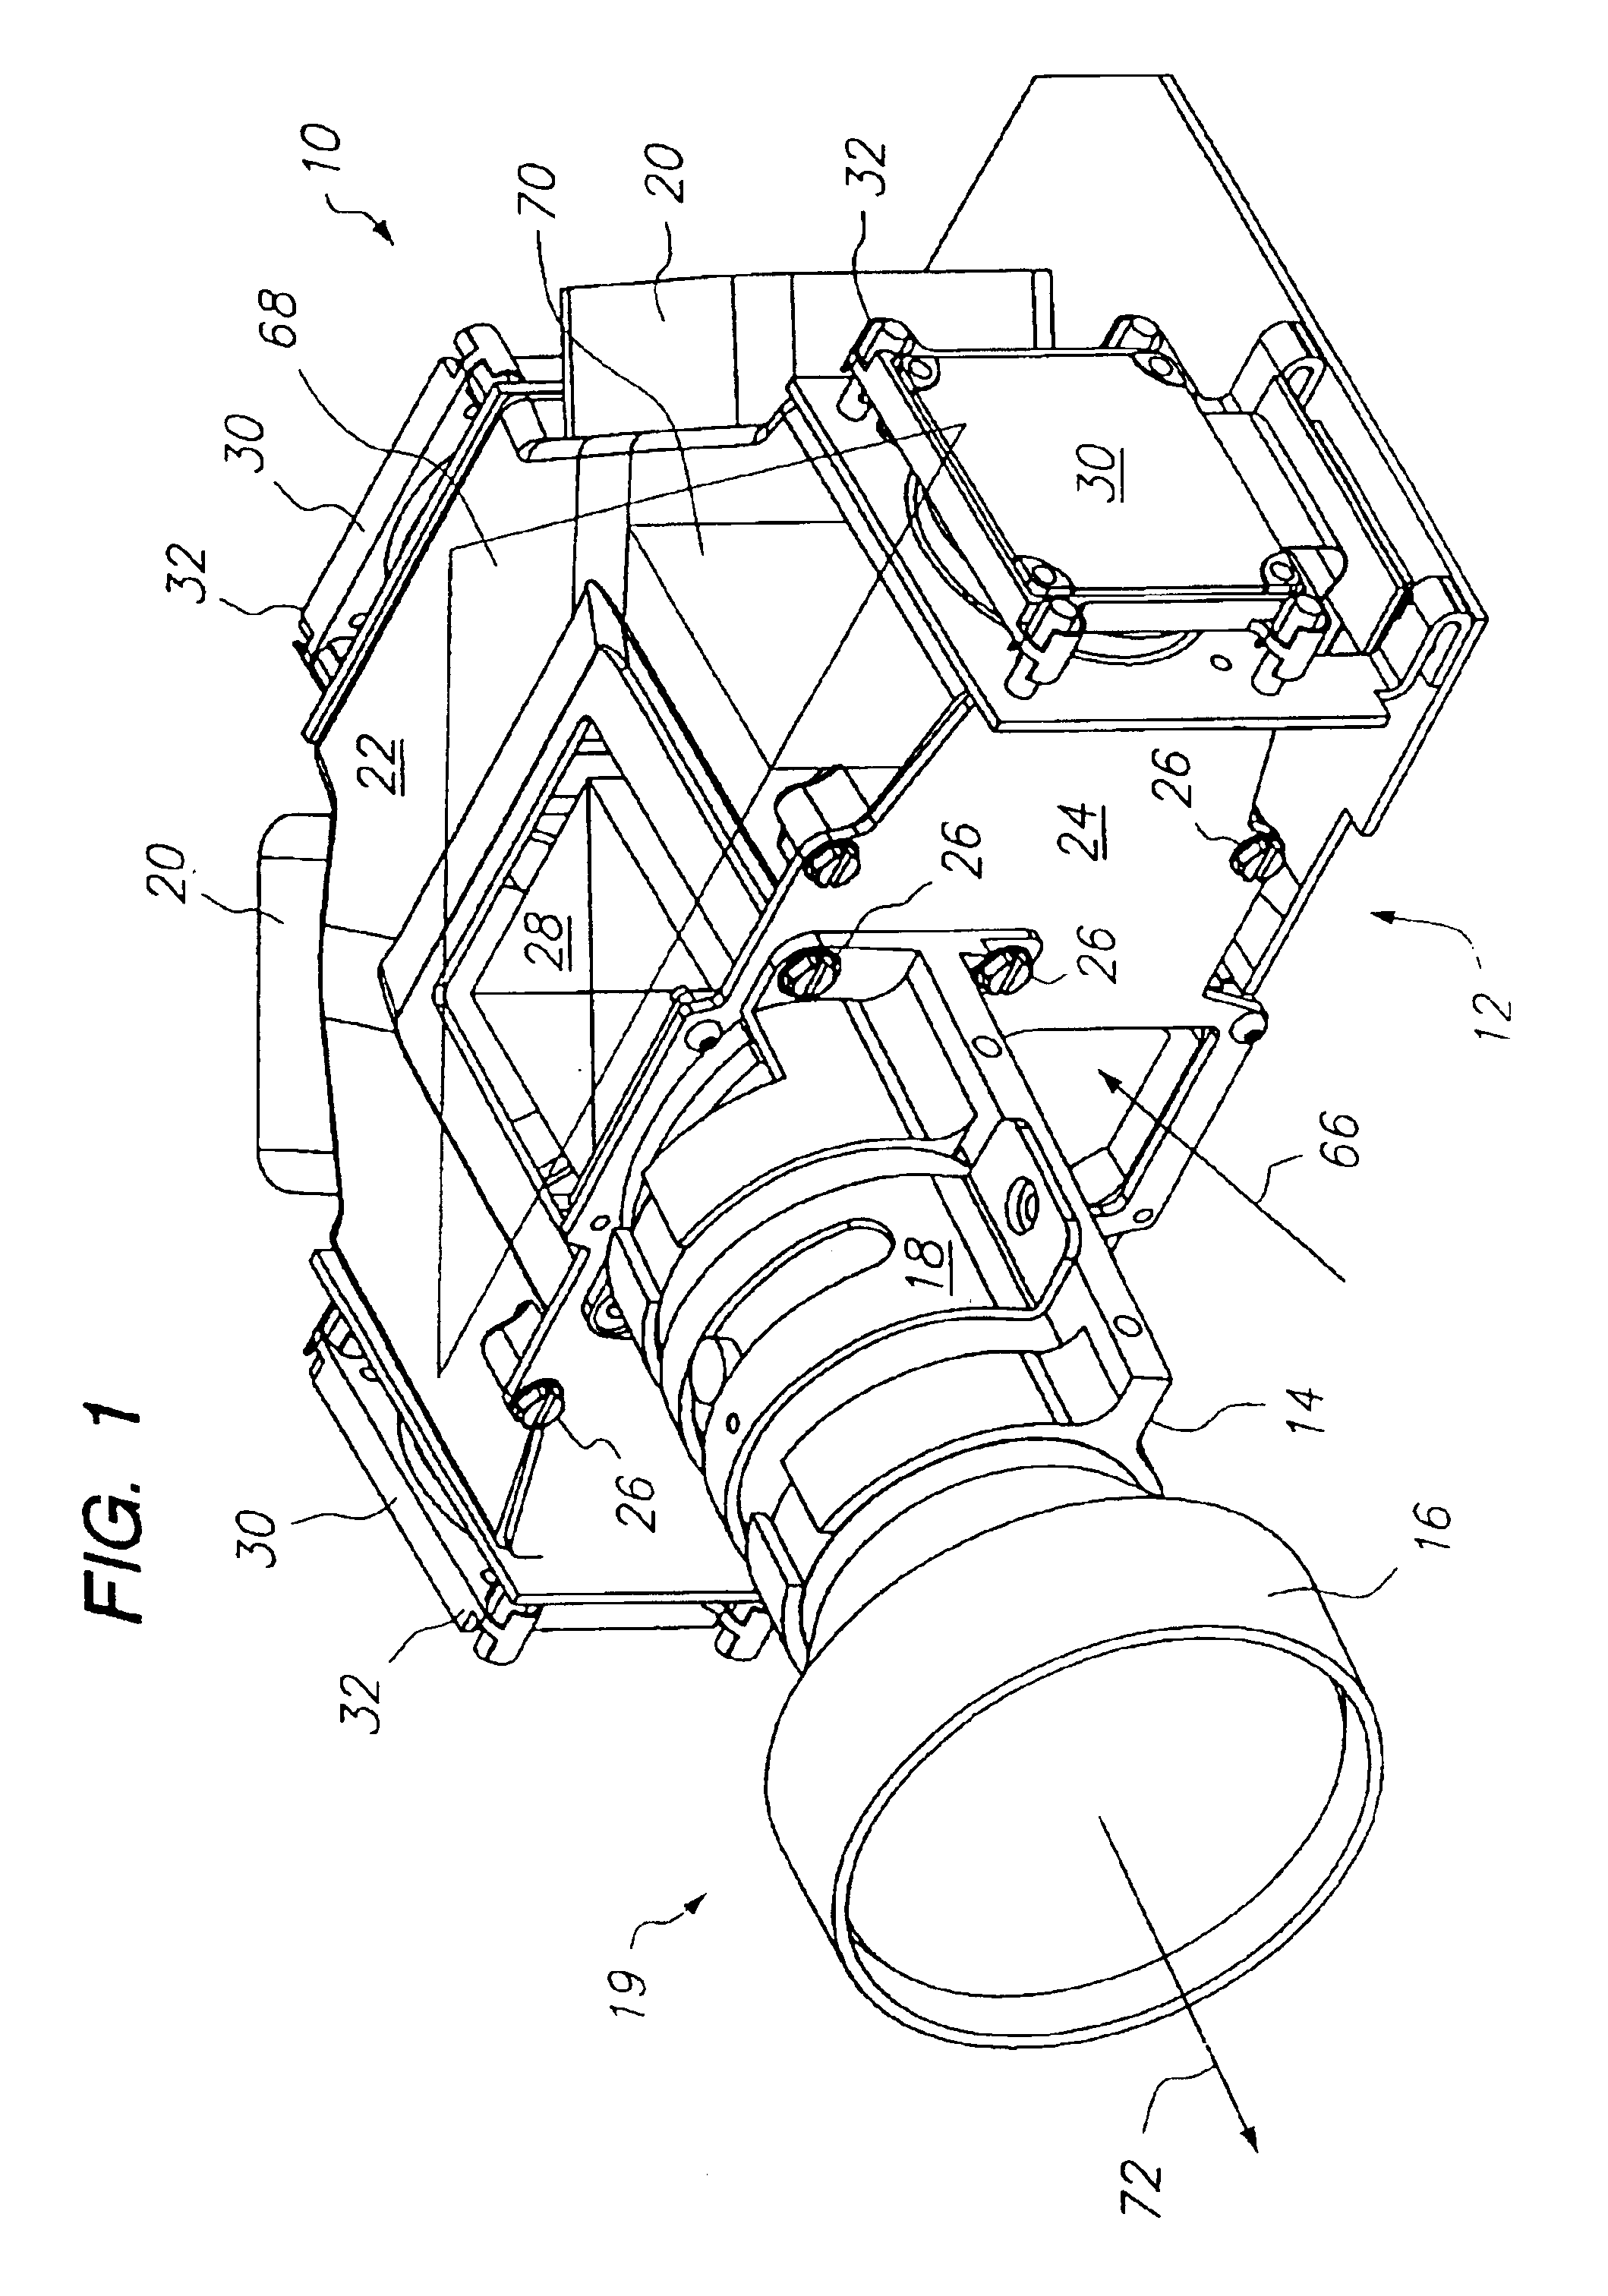 Multi channel imaging engine apparatus